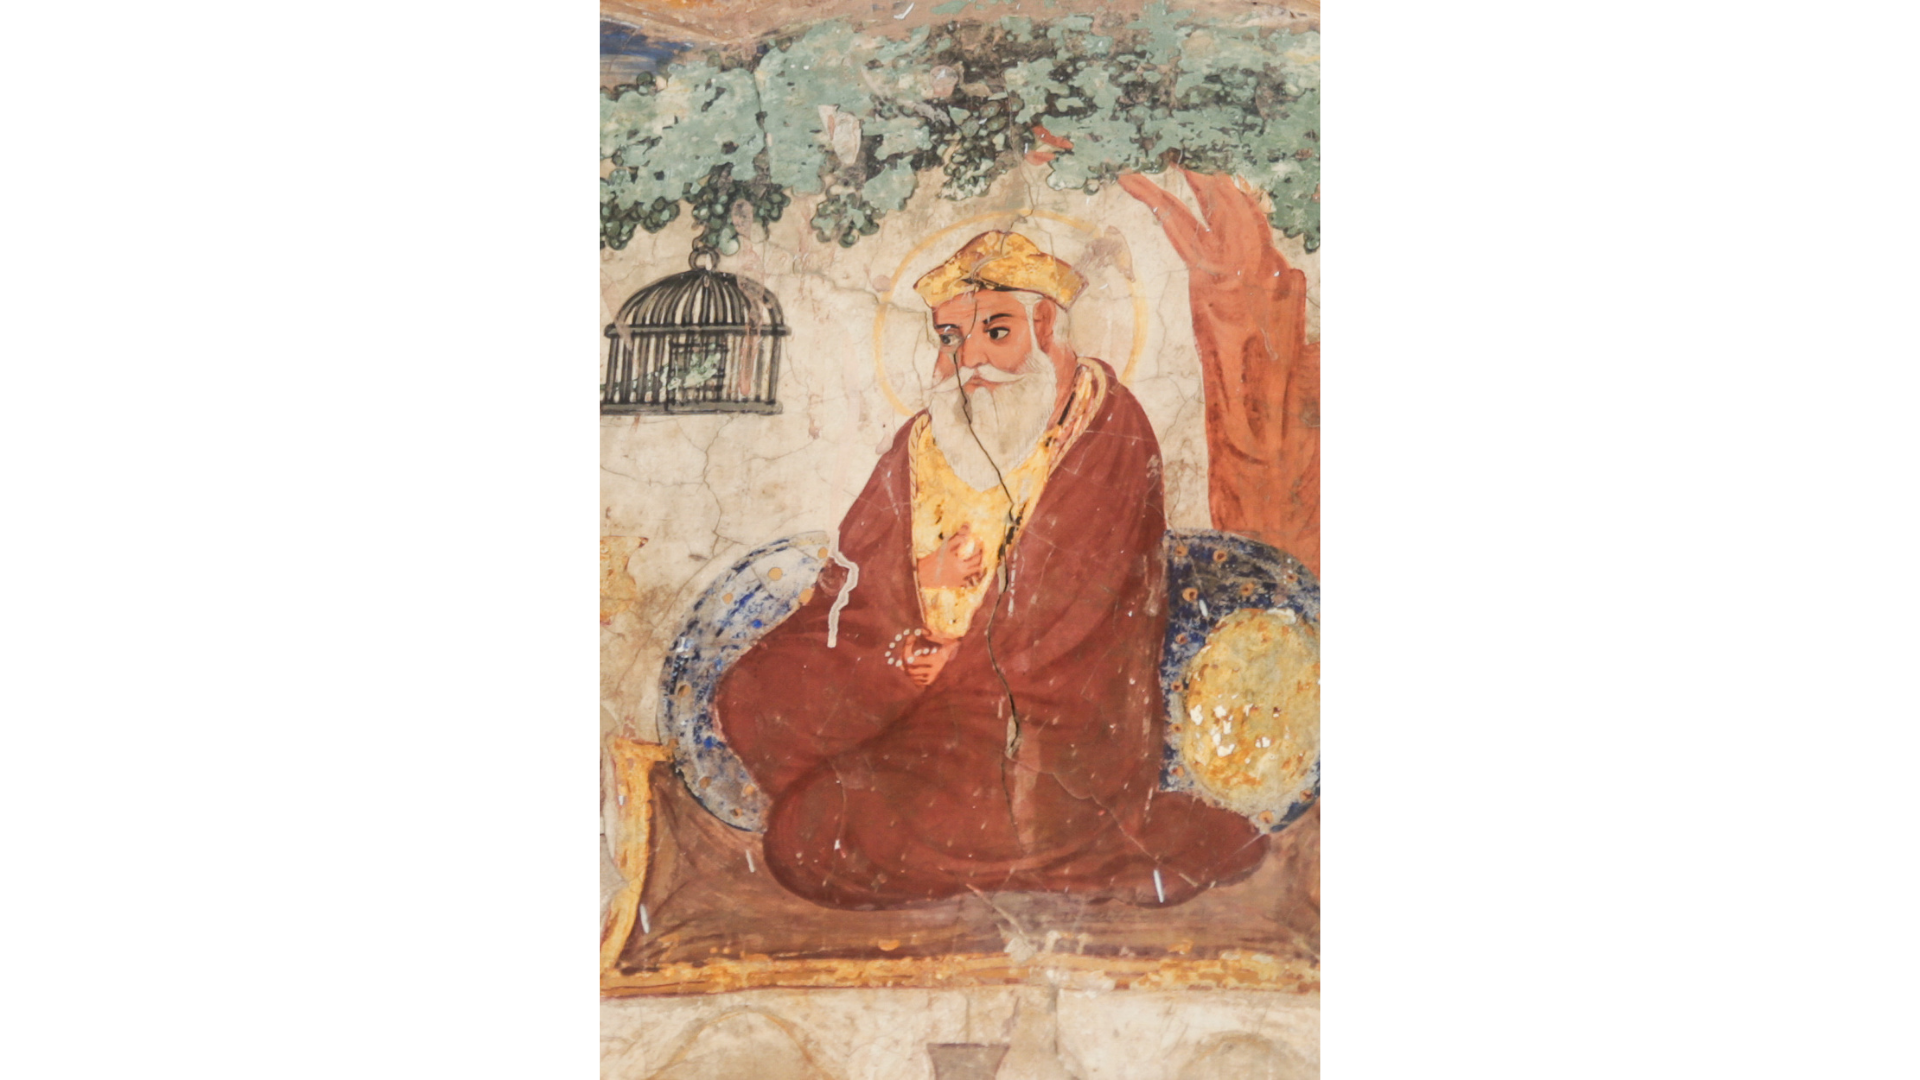 19th century mural painting from Gurudwara Baba Atal depicting Guru Nanak